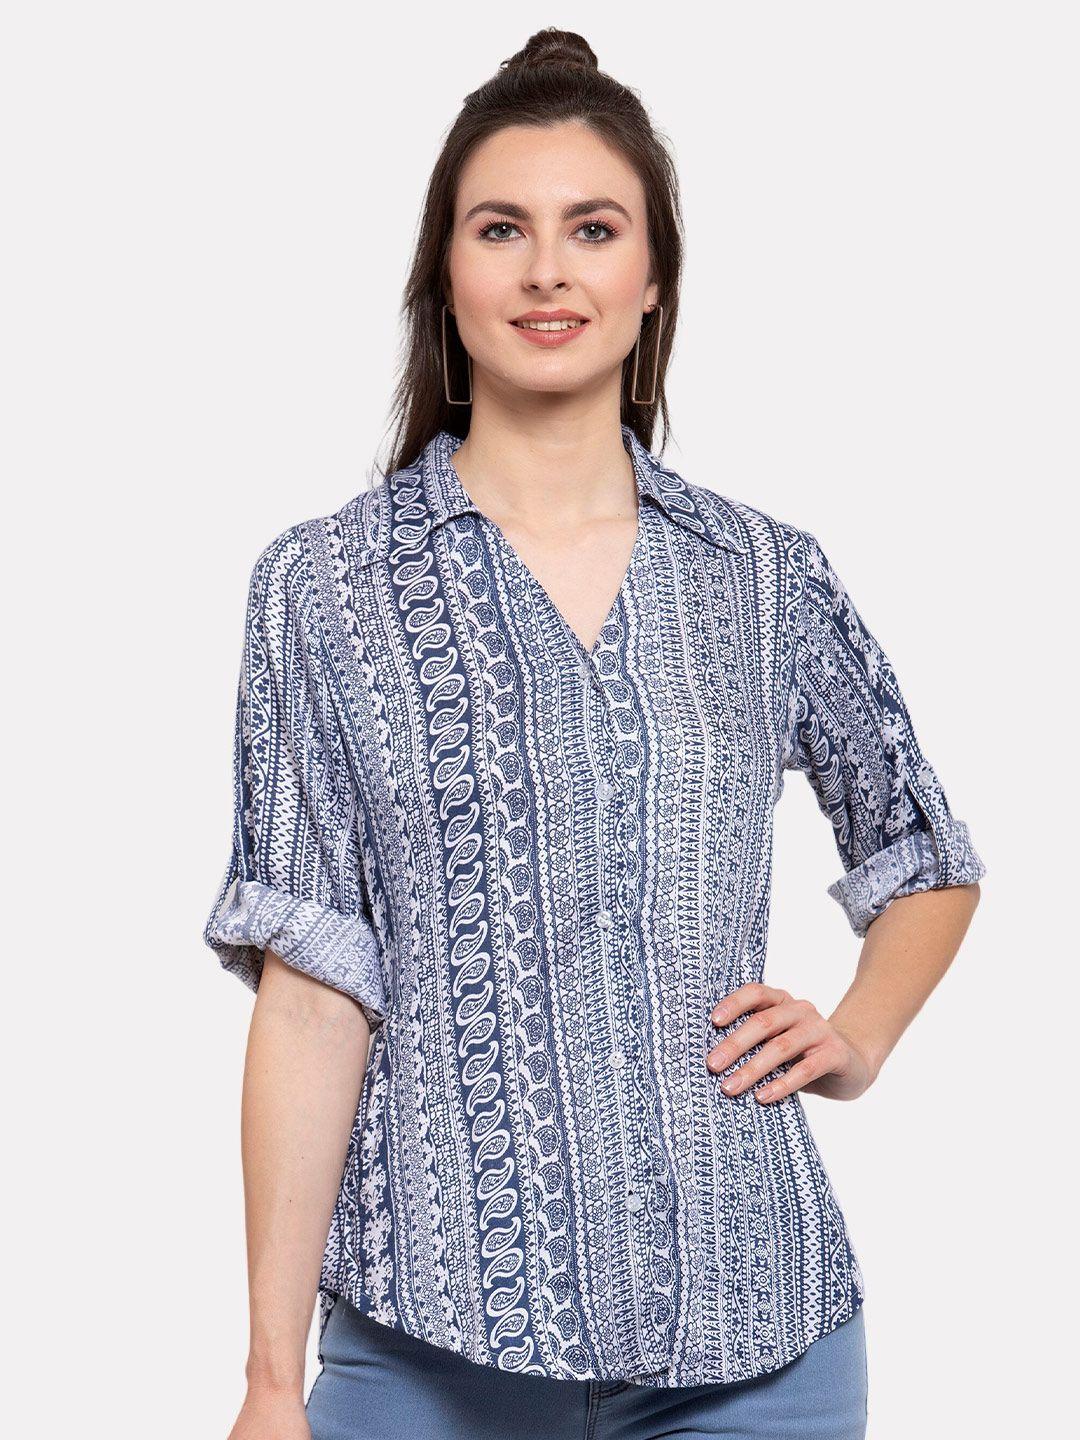 patrorna women blue comfort printed casual shirt